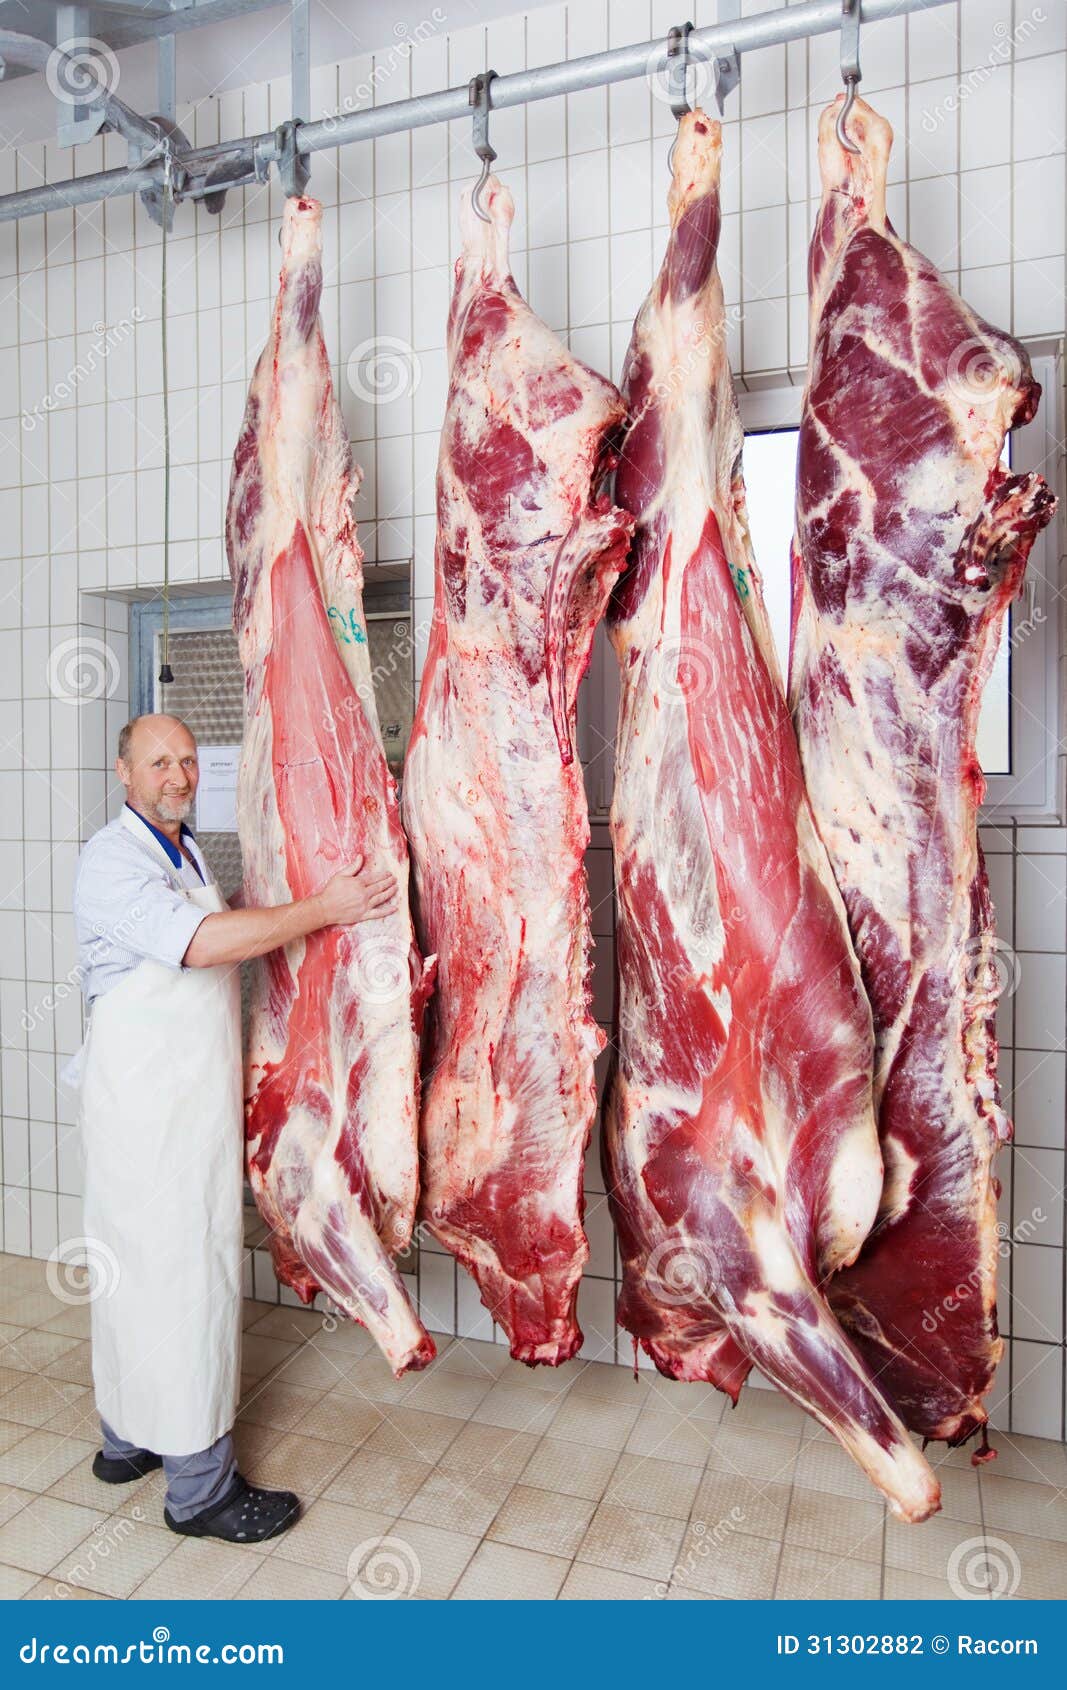 butcher-posing-peeled-bodies-cow-his-shop-31302882.jpg